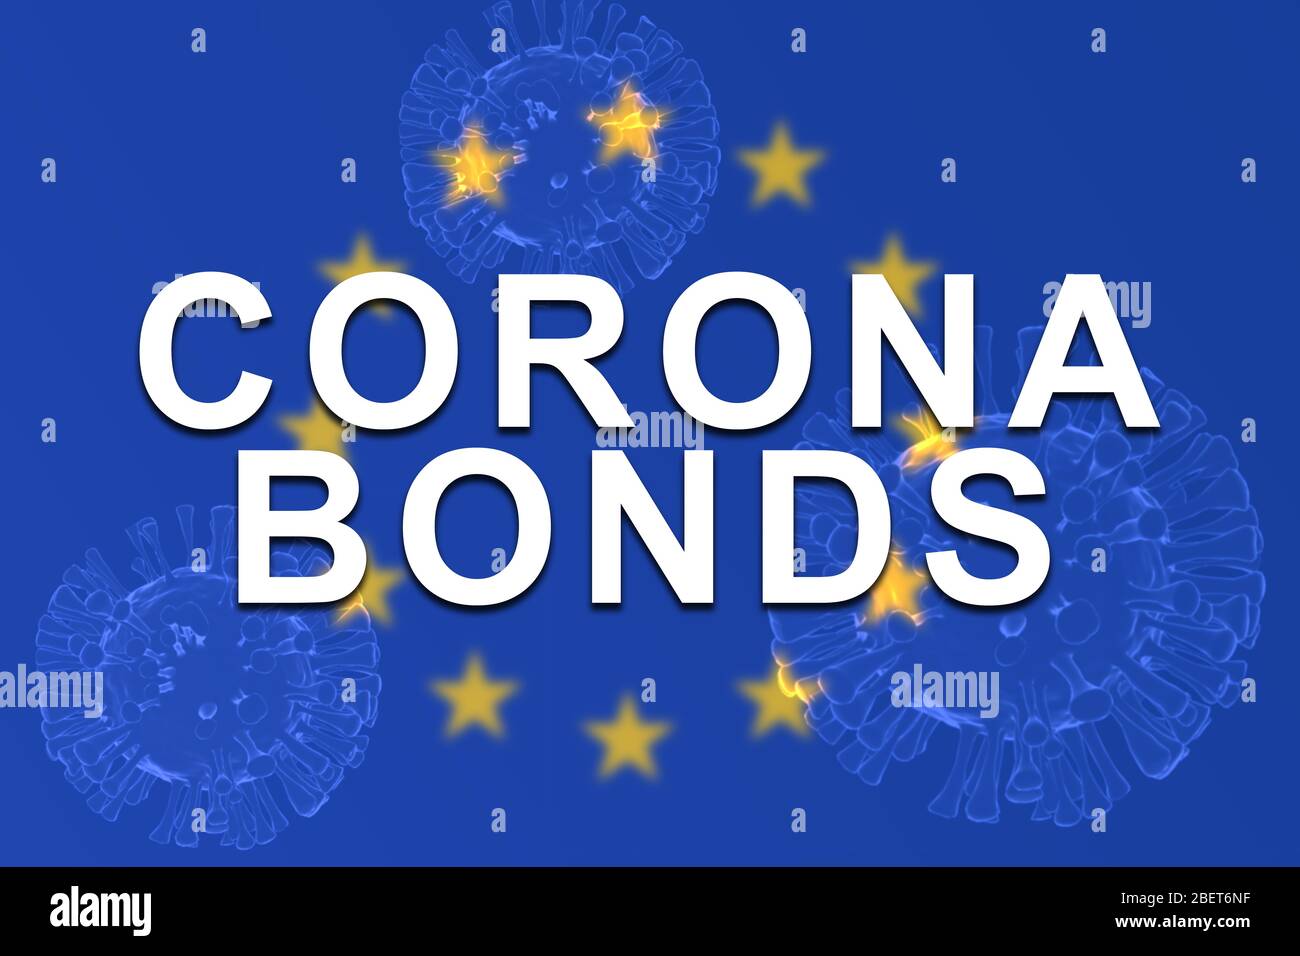 Corona Bonds on EU or European Union flag with 3d rendered illustration of virus as background. Stock Photo